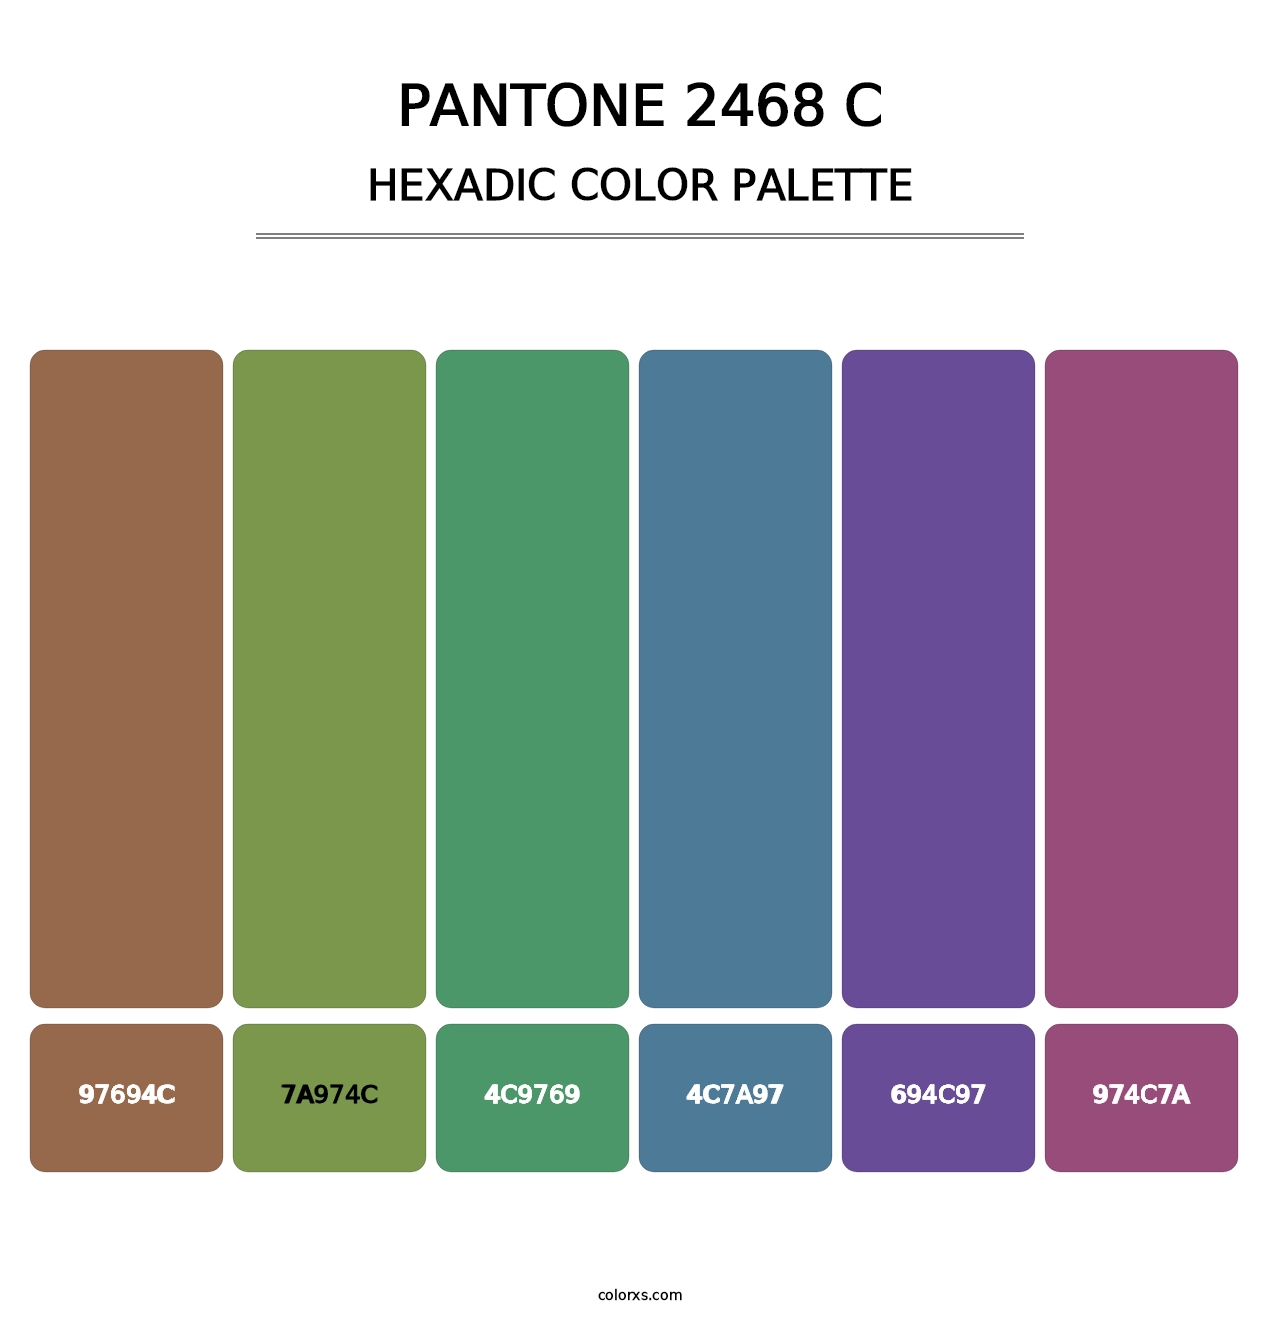 PANTONE 2468 C - Hexadic Color Palette